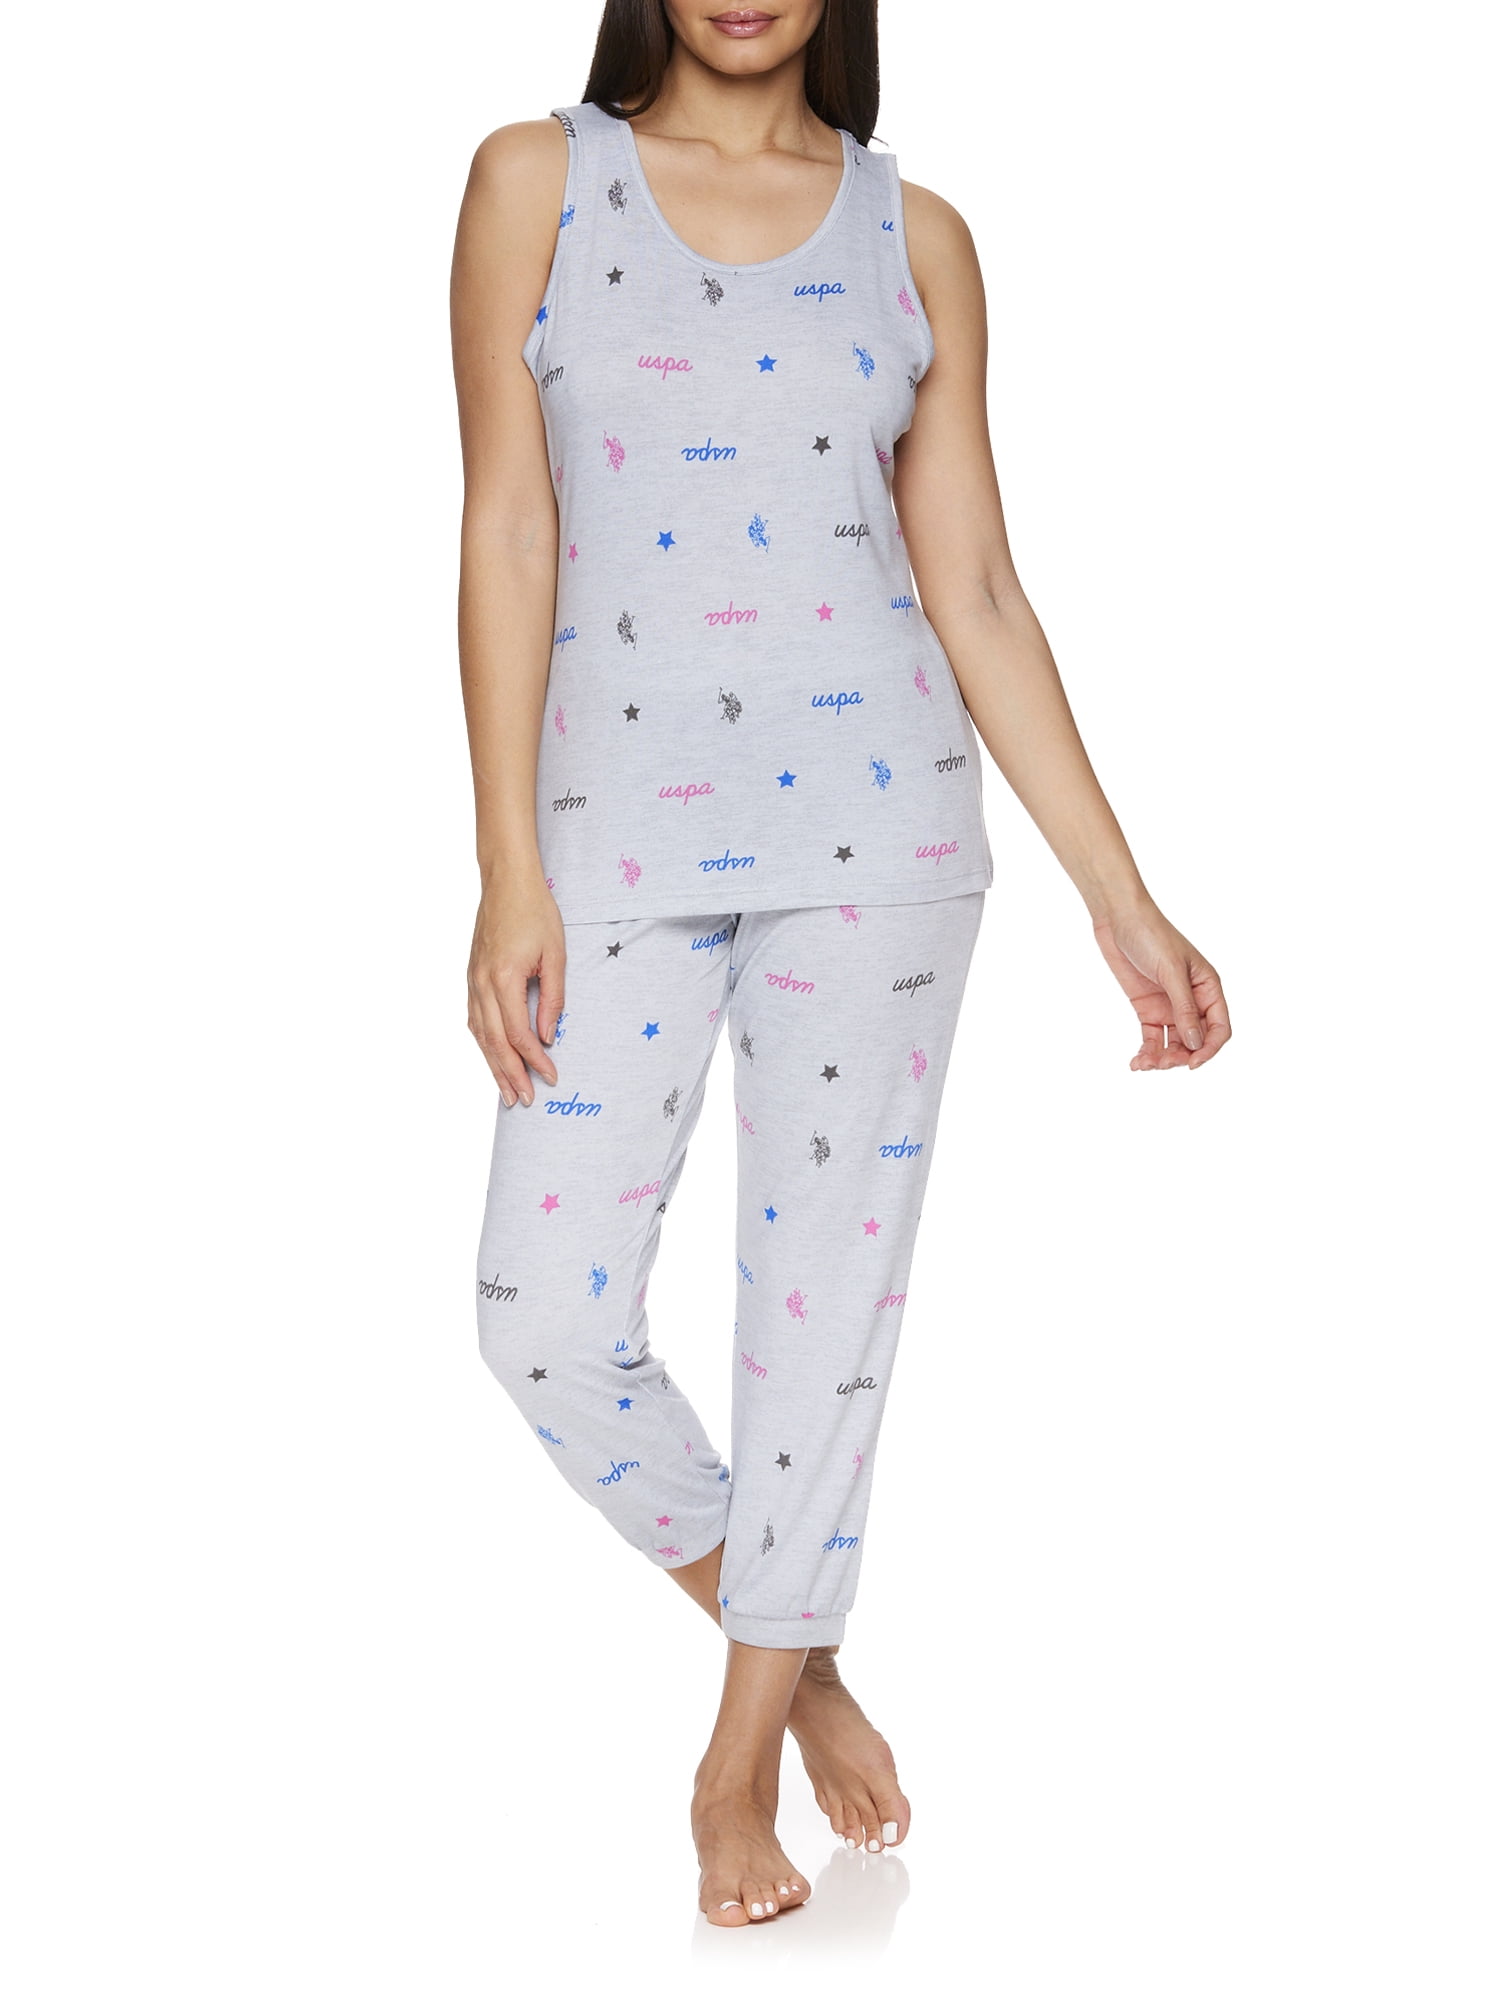 U.S Essentials Womens Pajama Racerback Tank and Pocket Shorts Sleepwear Set Polo Assn 